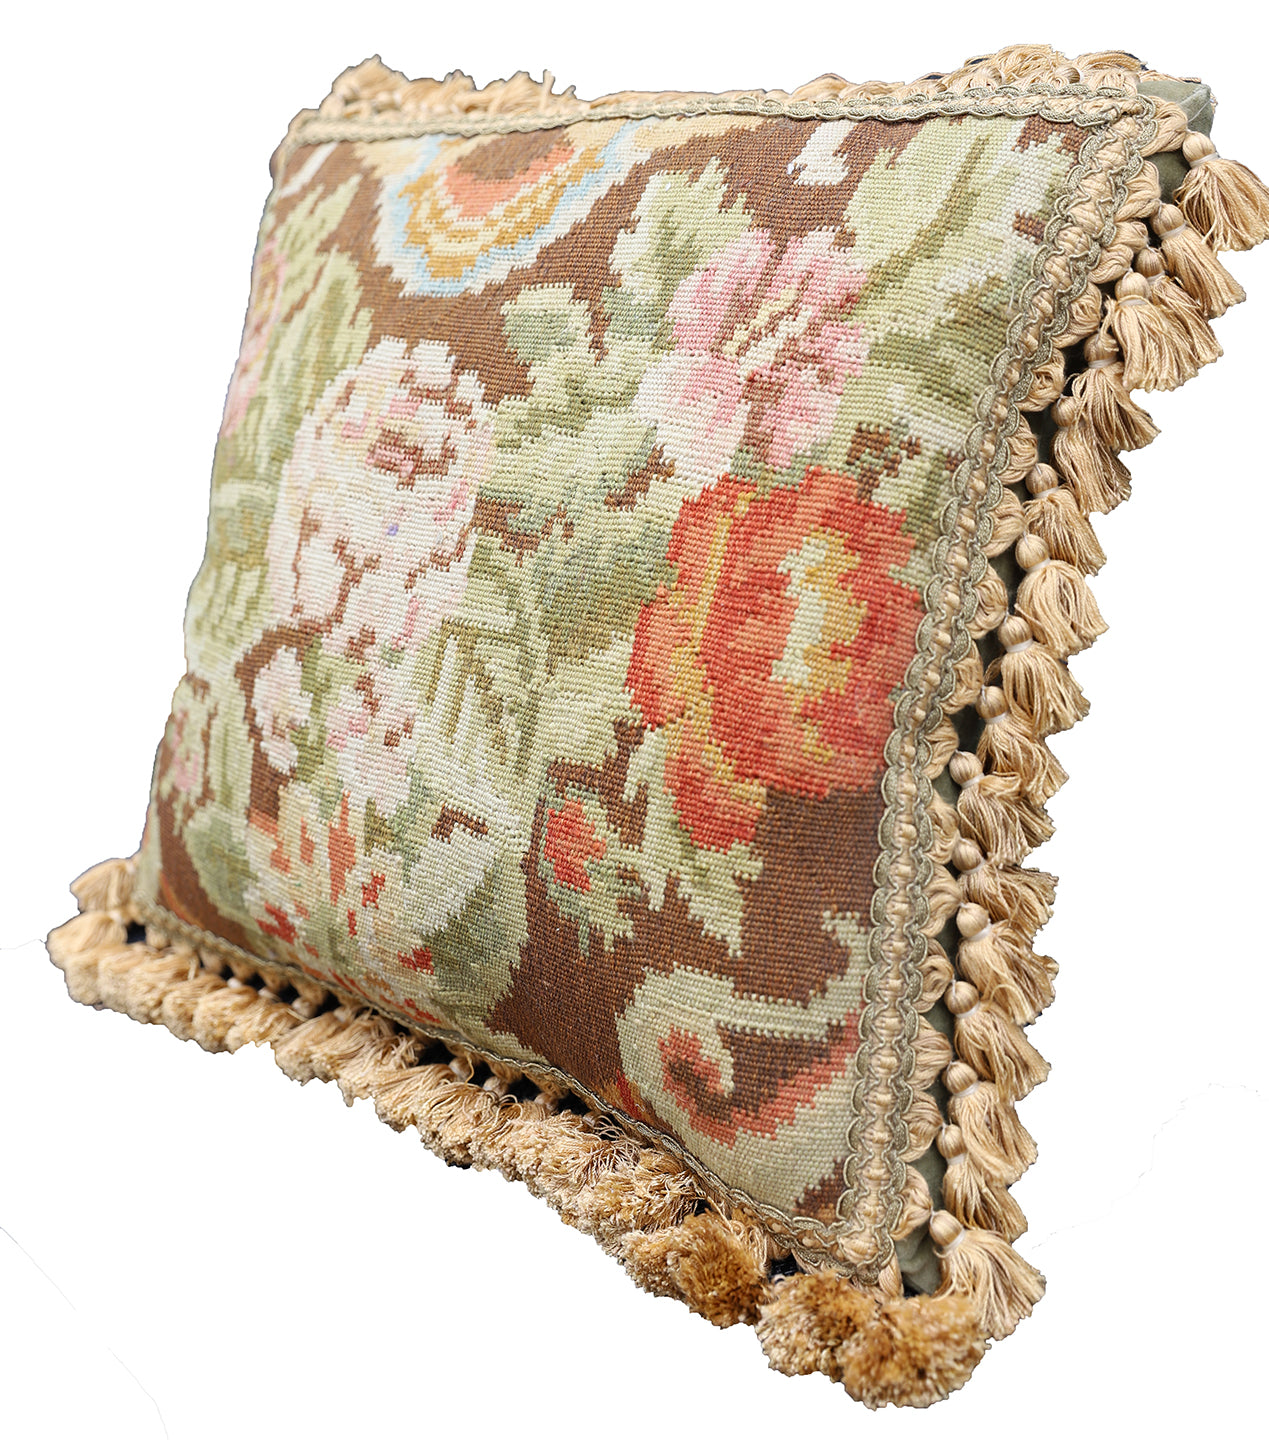 21"x18" Ariana Hand-Woven Bessarabian Style Kilim Pillow